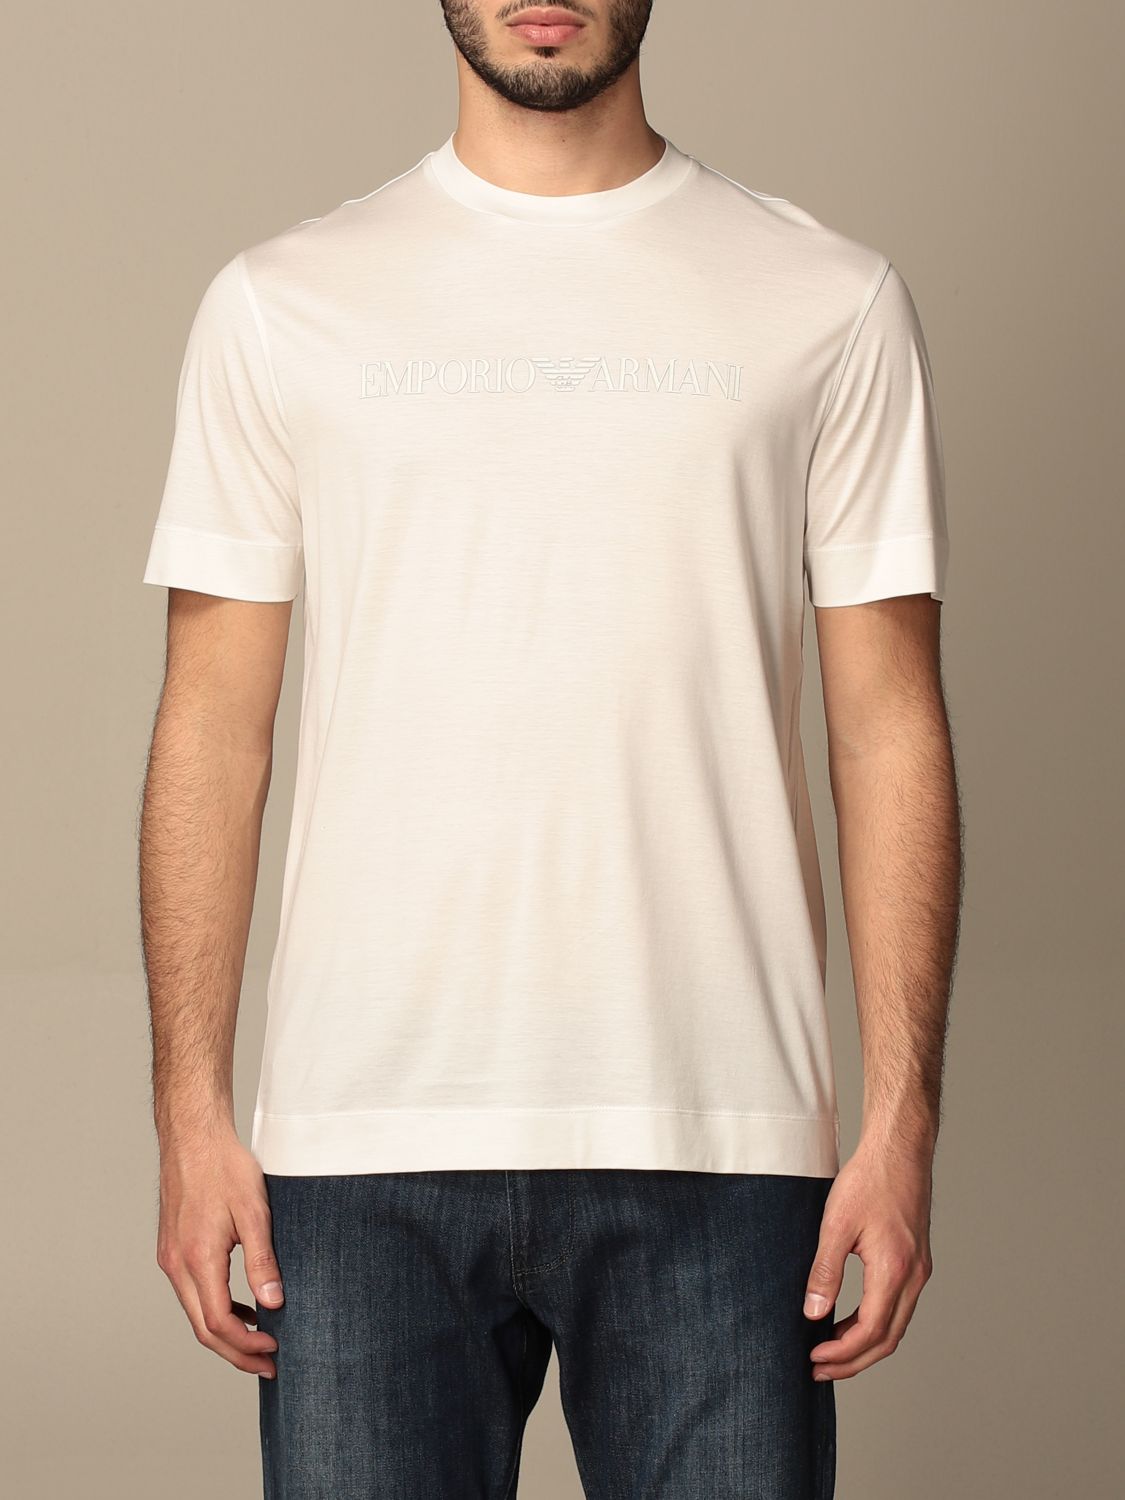 Emporio Armani cotton t-shirt with logo